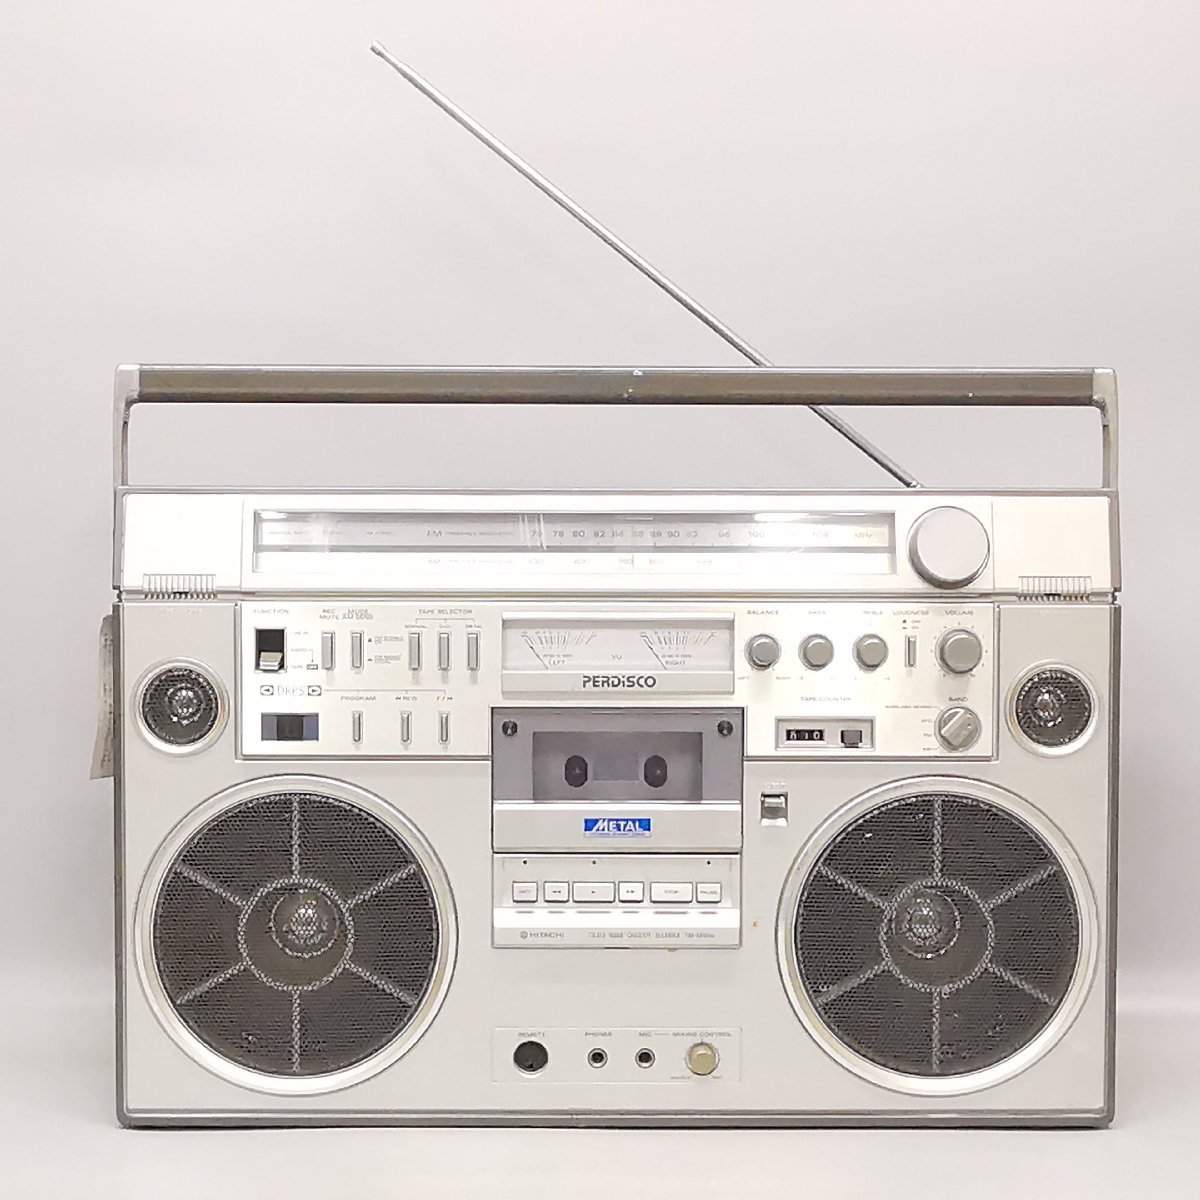 HITACHI 日立 TRK-8600RM PERDISCO パディスコ ラジカセ ラジオ FM/AM 